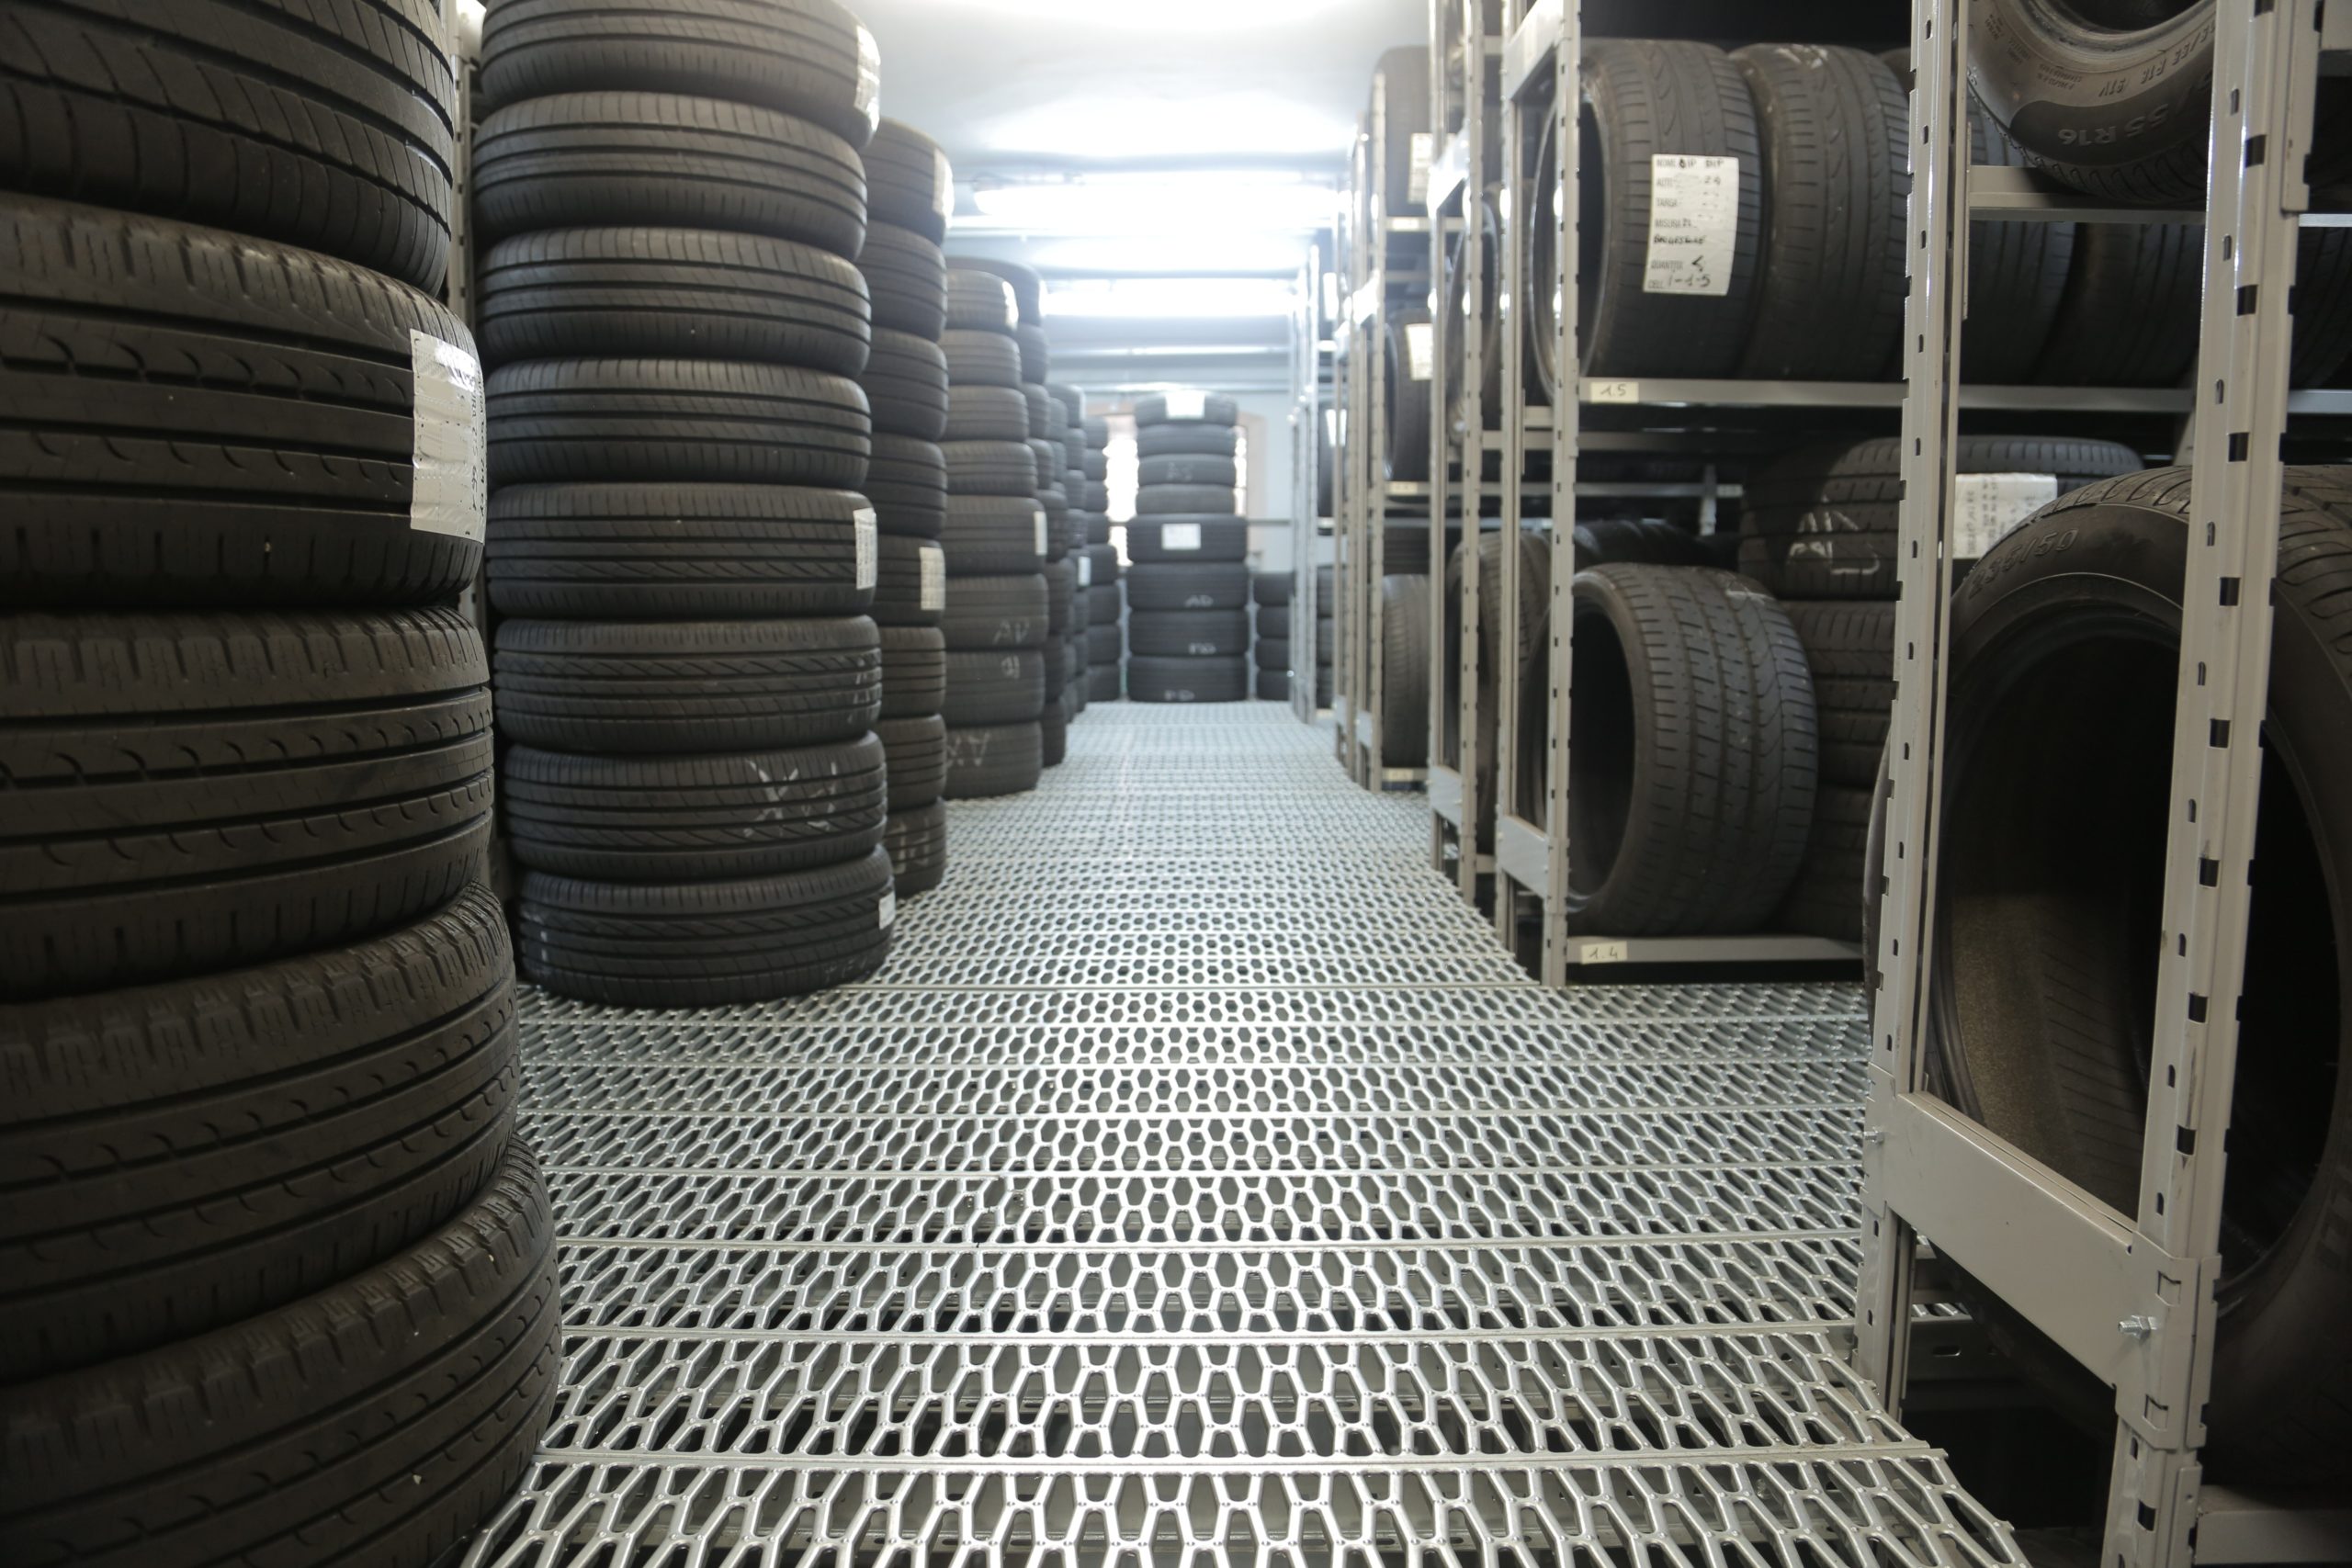 Kumho Tires Plans St. Mary Parish, Louisiana, Warehouse-Distribution Complex